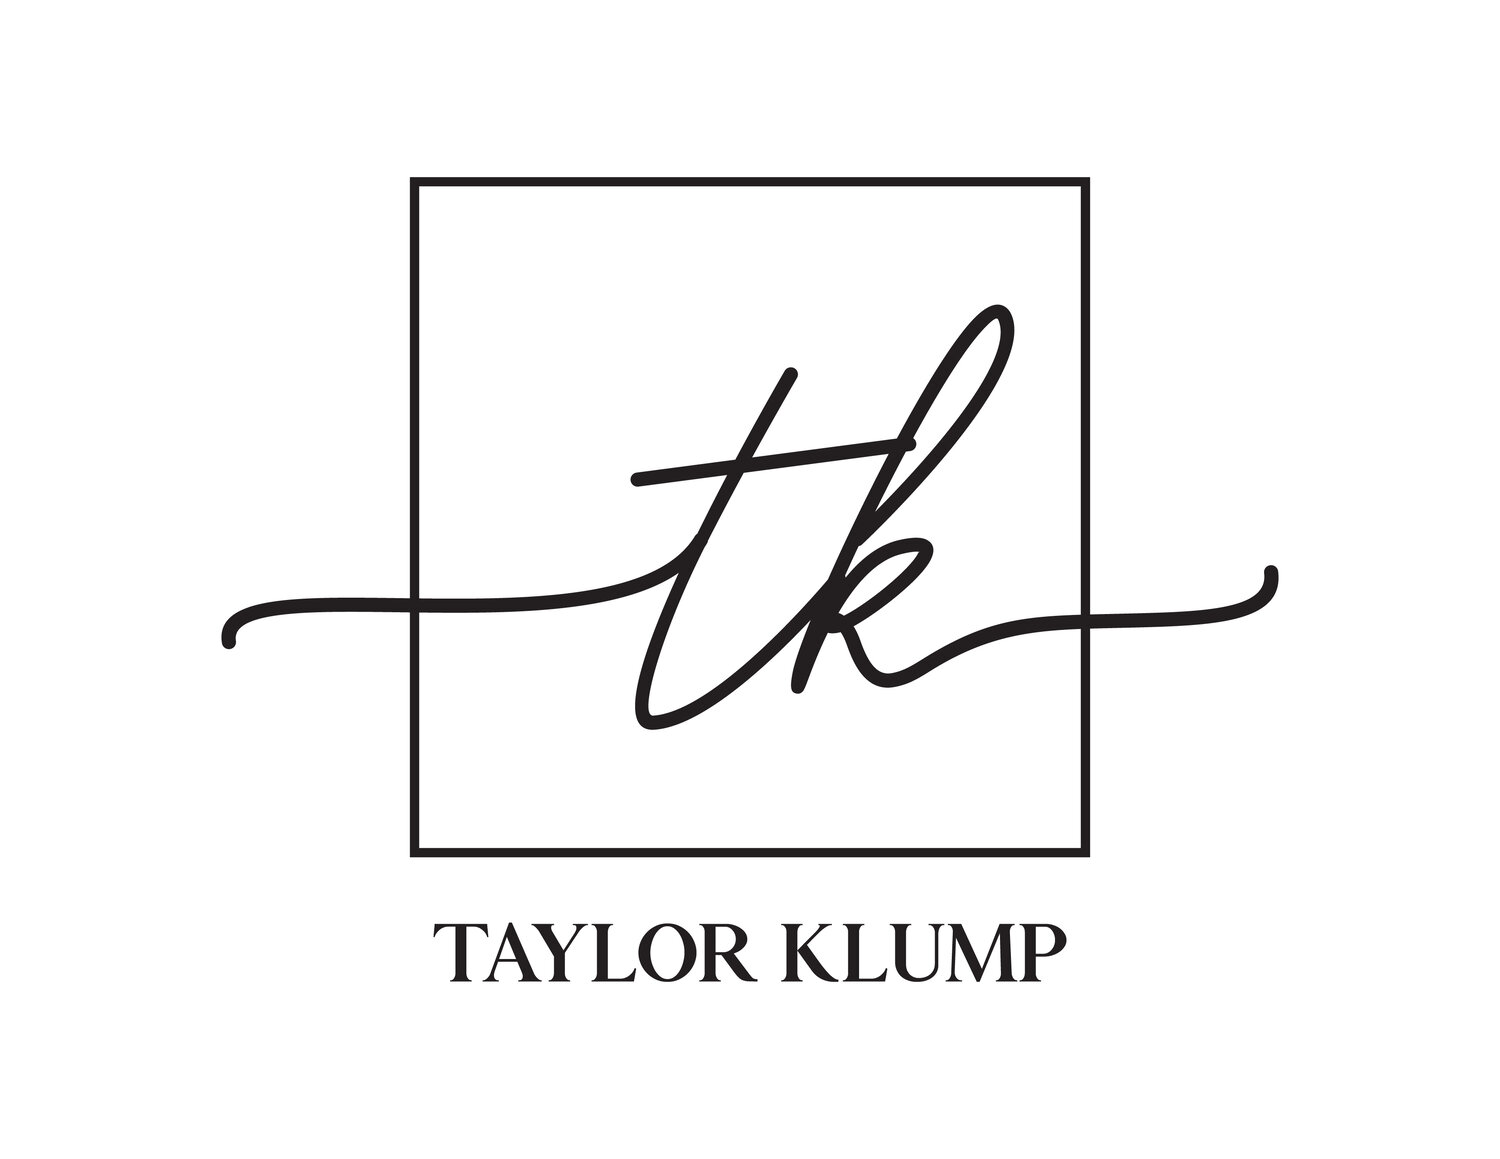 Taylor Klump